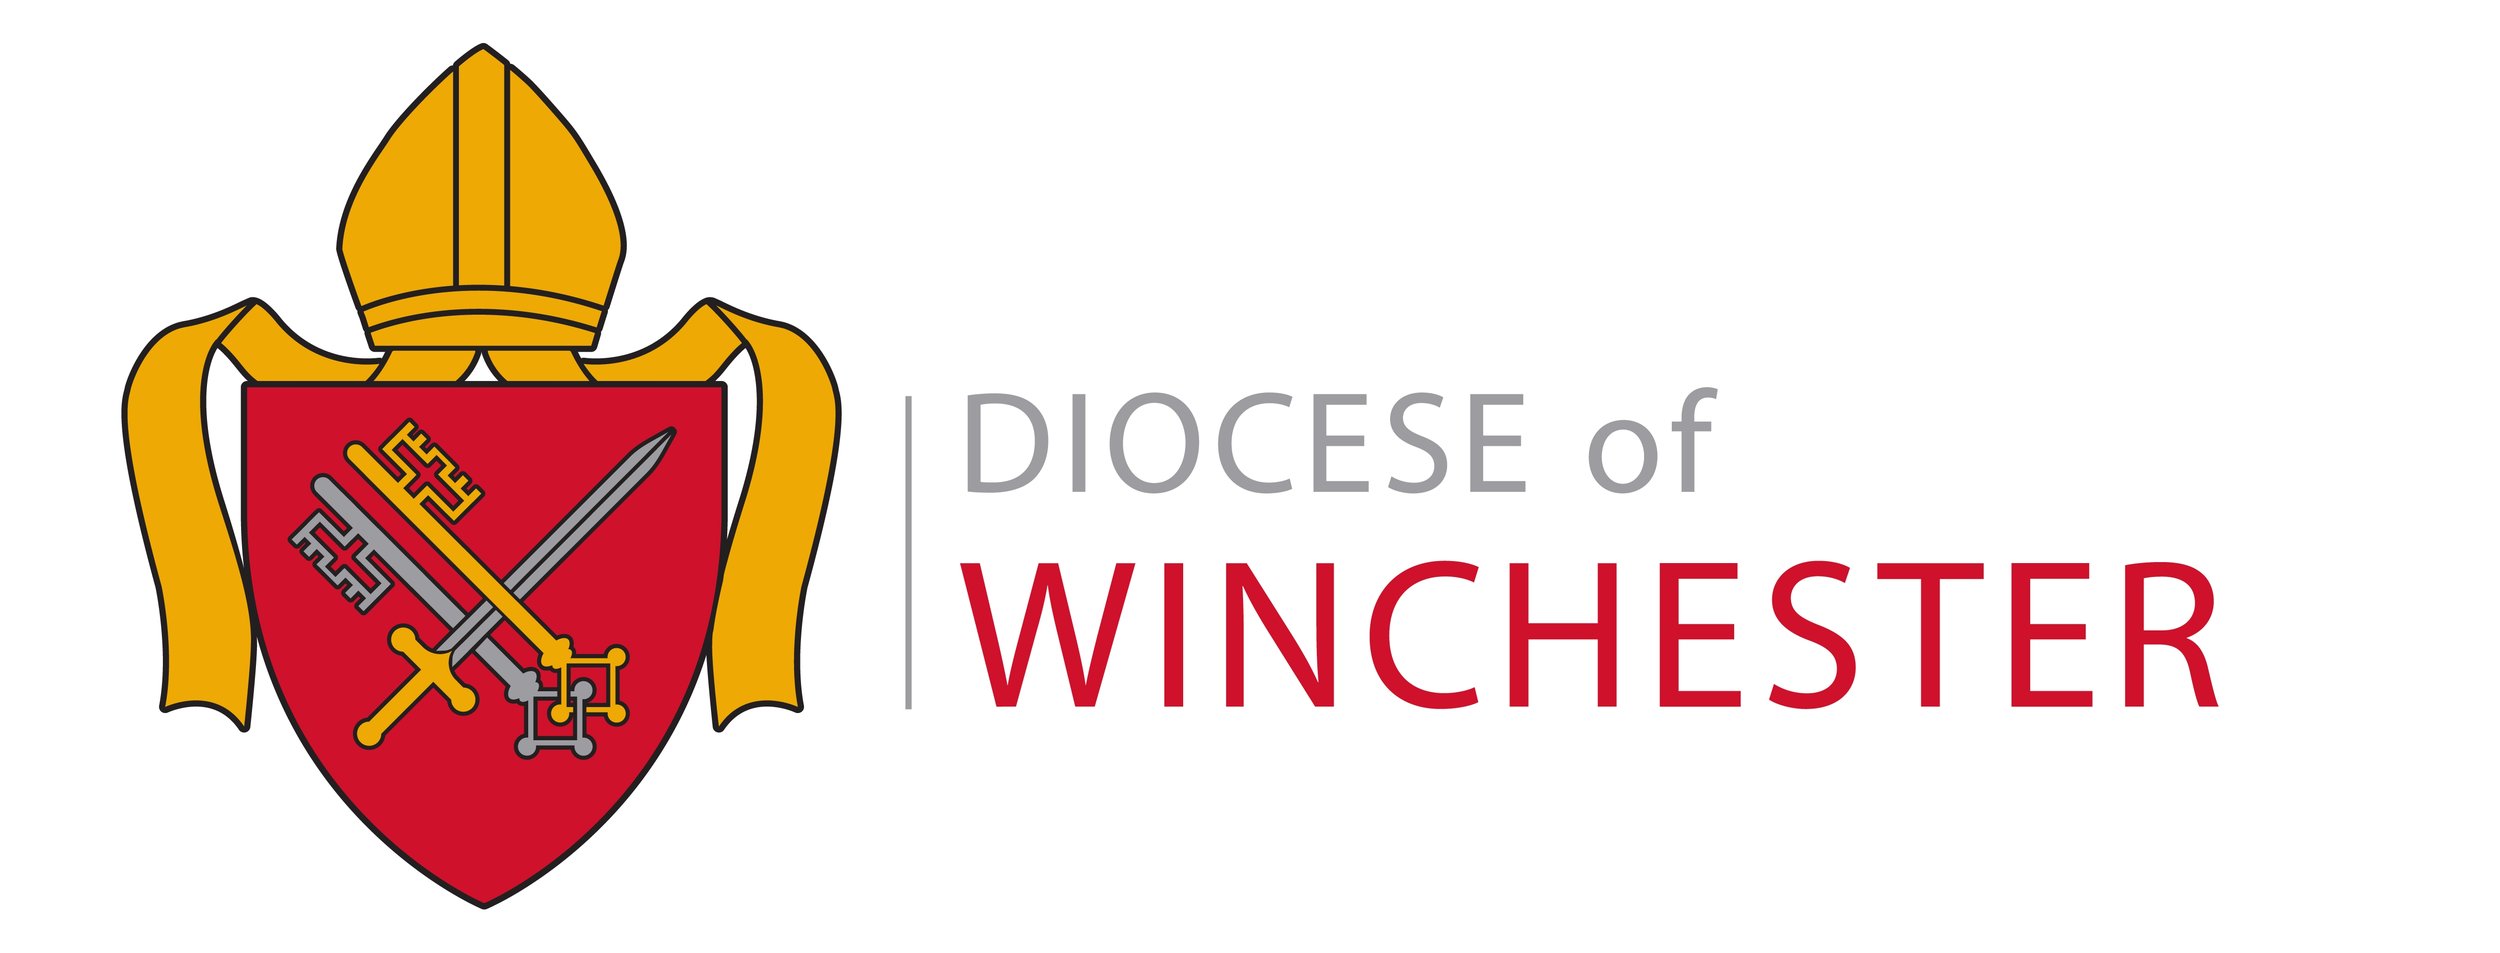 Diocesan-Logo_JwJOGSH.jpg